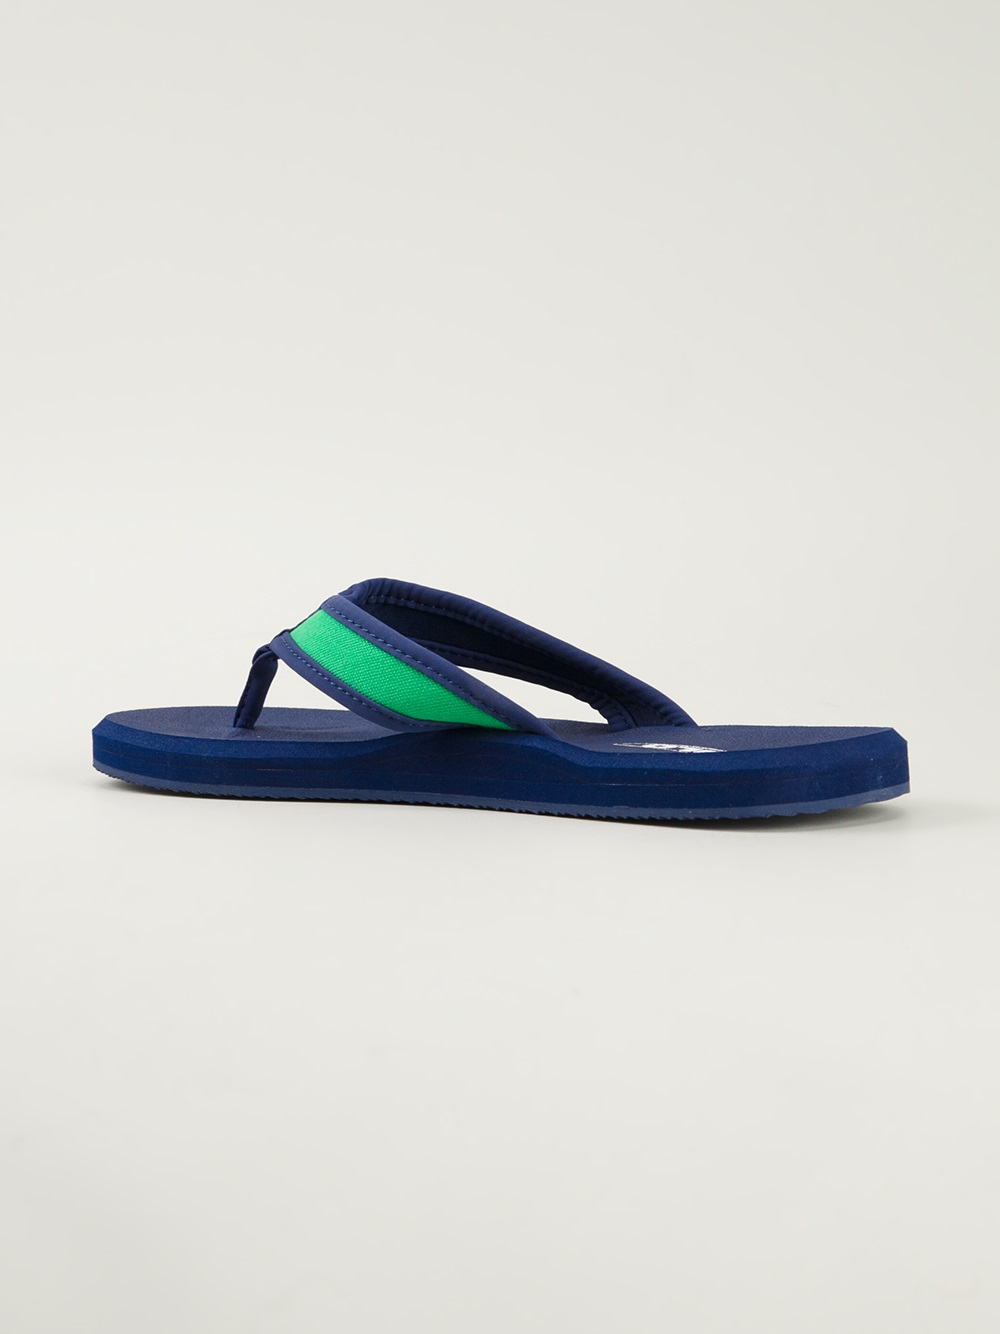 Polo Ralph Lauren Almer Flip Flops in Blue (Green) for Men - Lyst